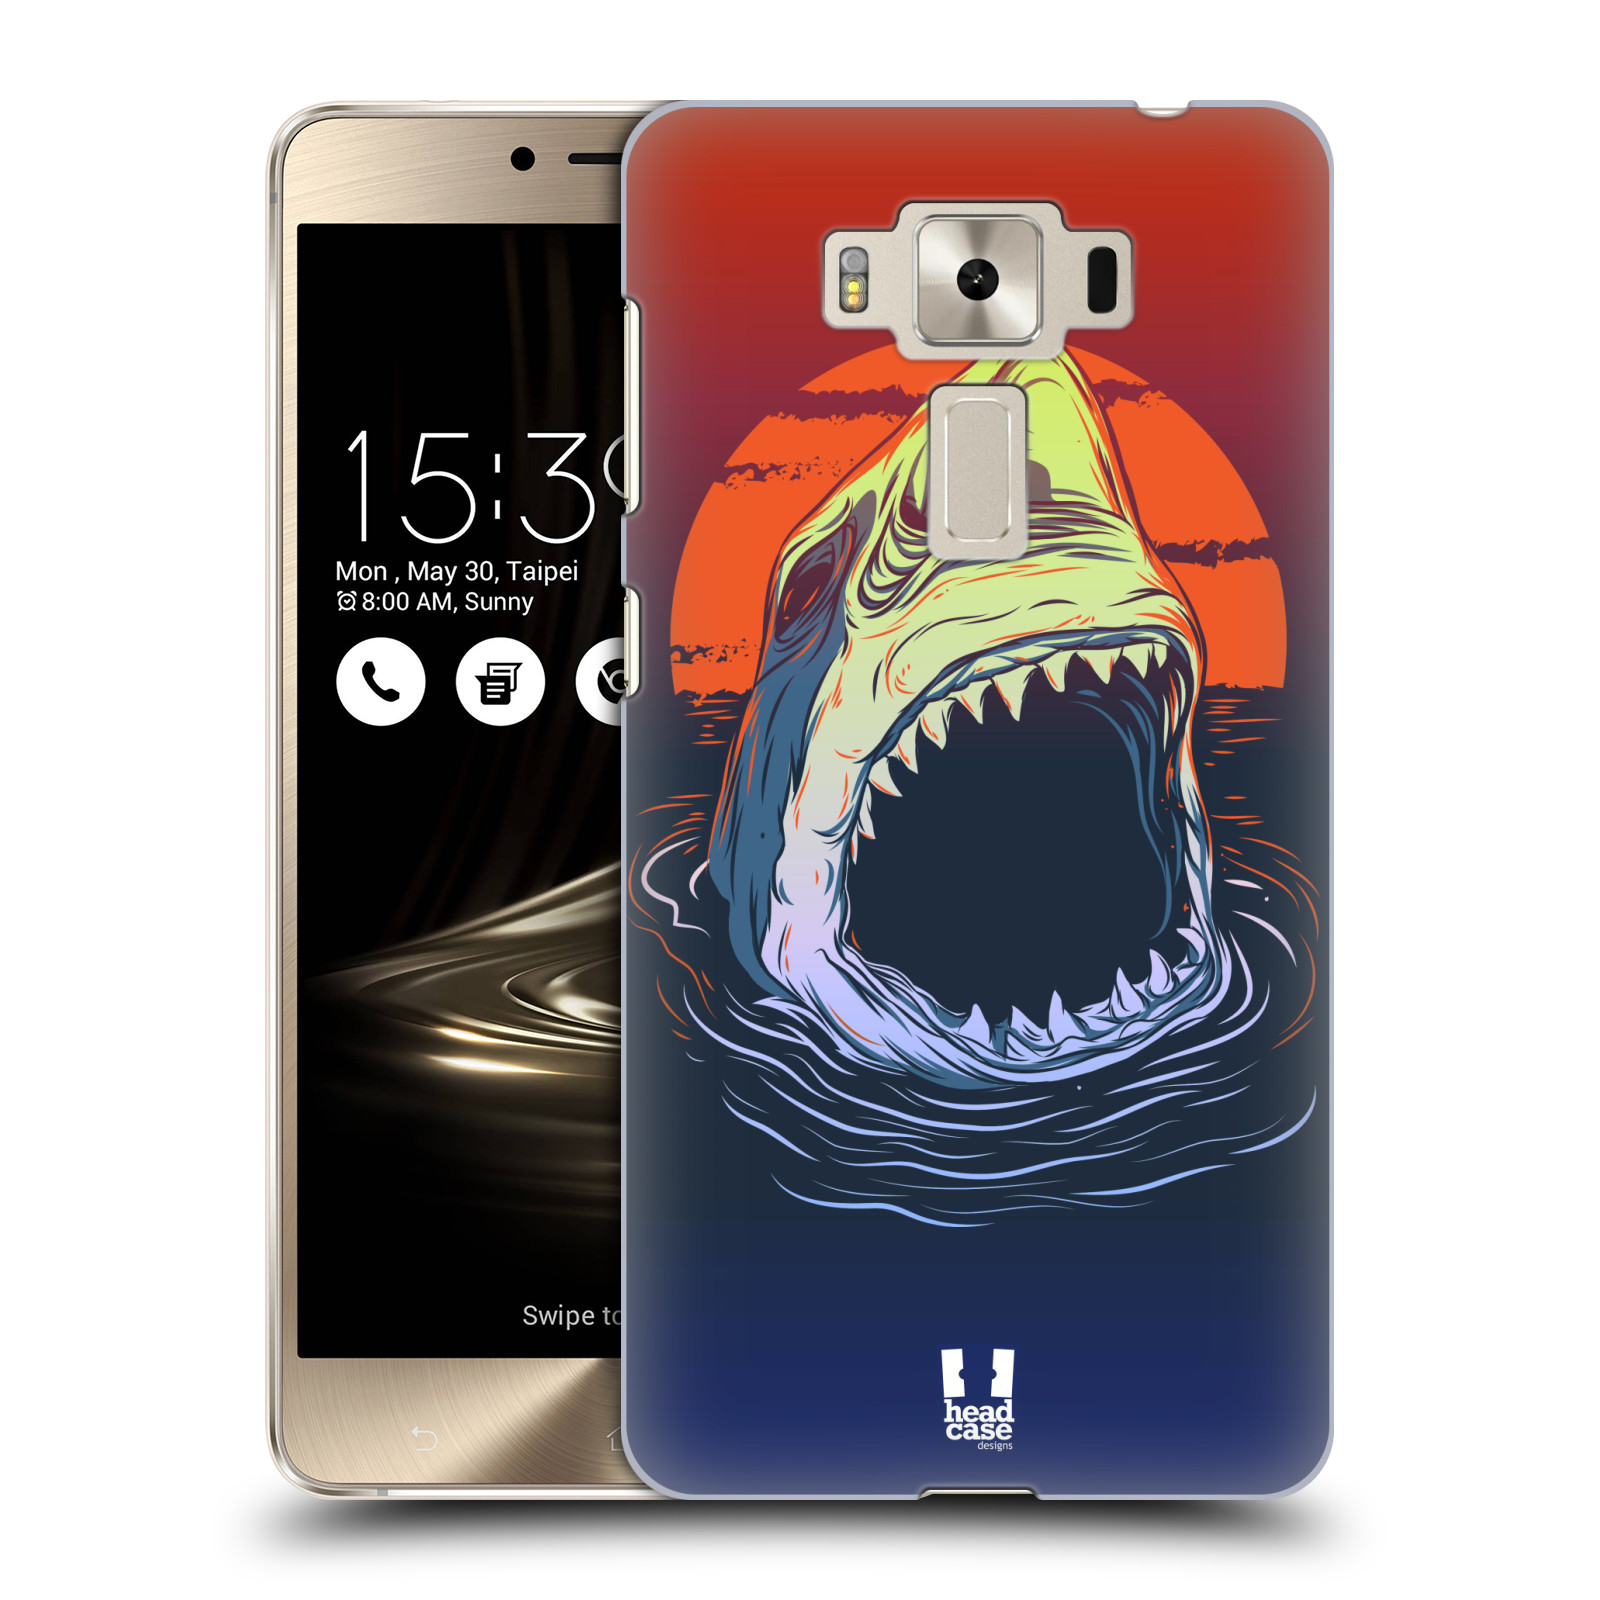 HEAD CASE plastový obal na mobil Asus Zenfone 3 DELUXE ZS550KL vzor mořská monstra žralok